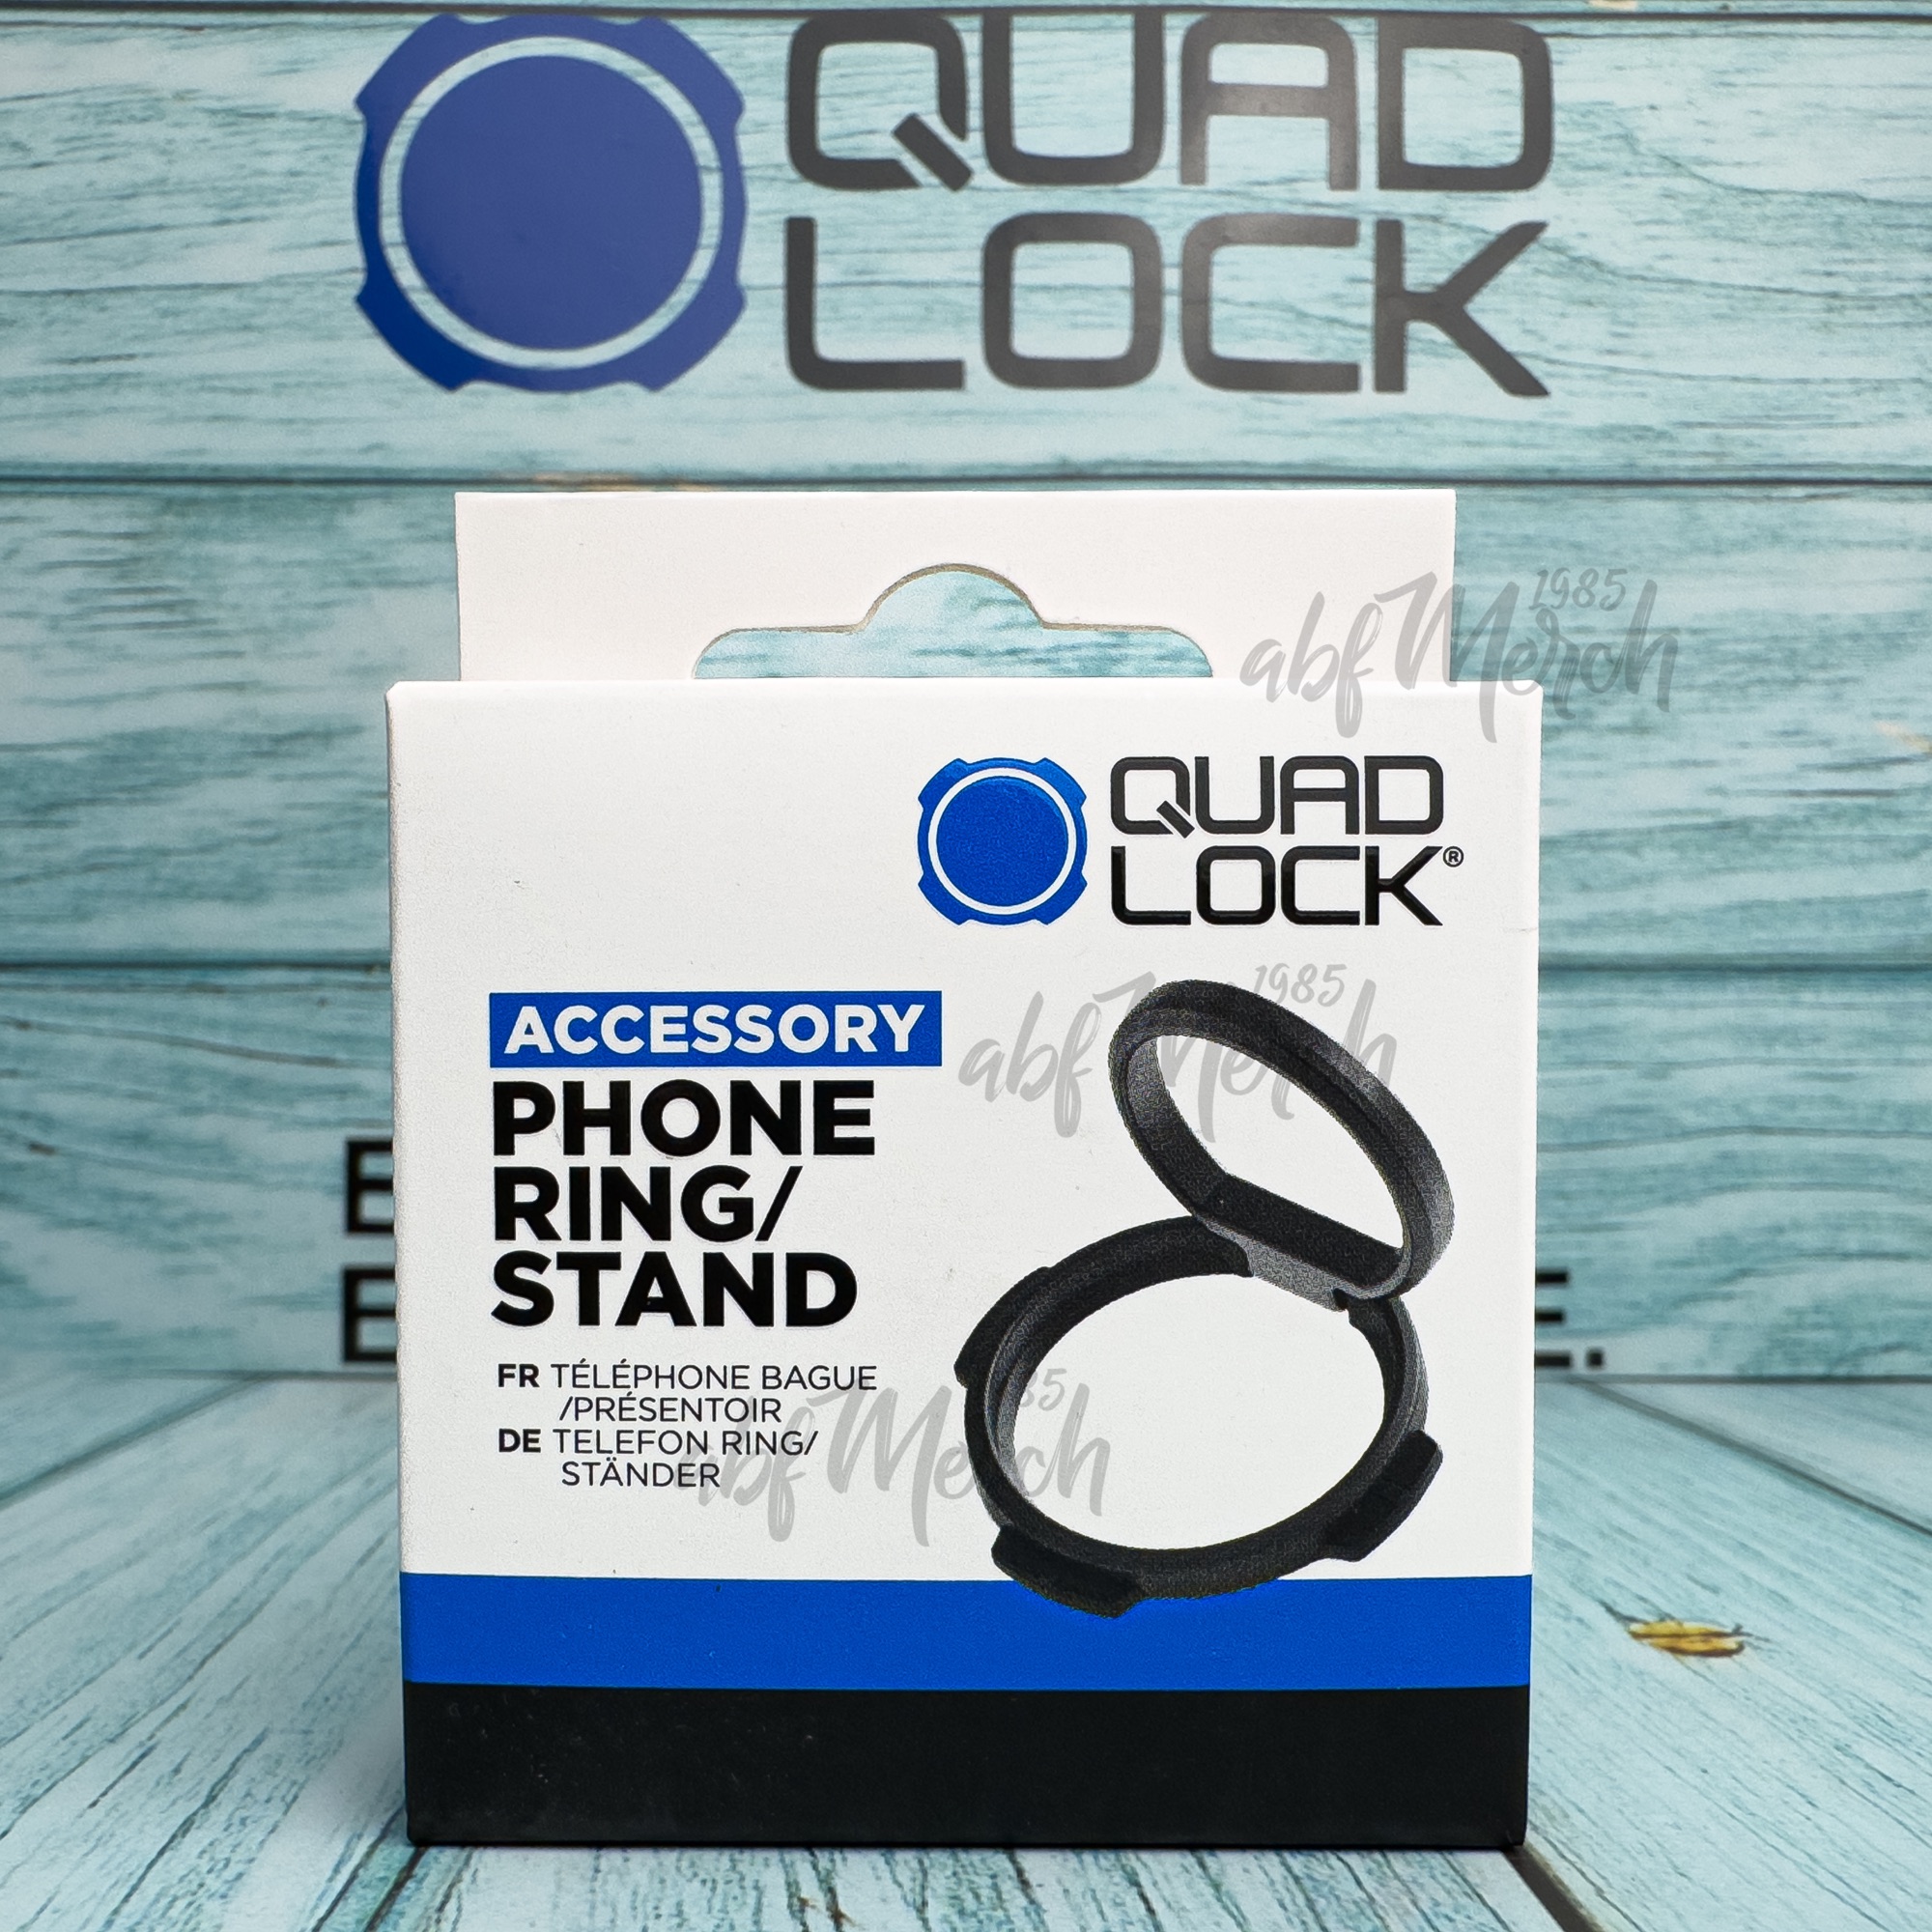 Quad Lock Ring/Stand